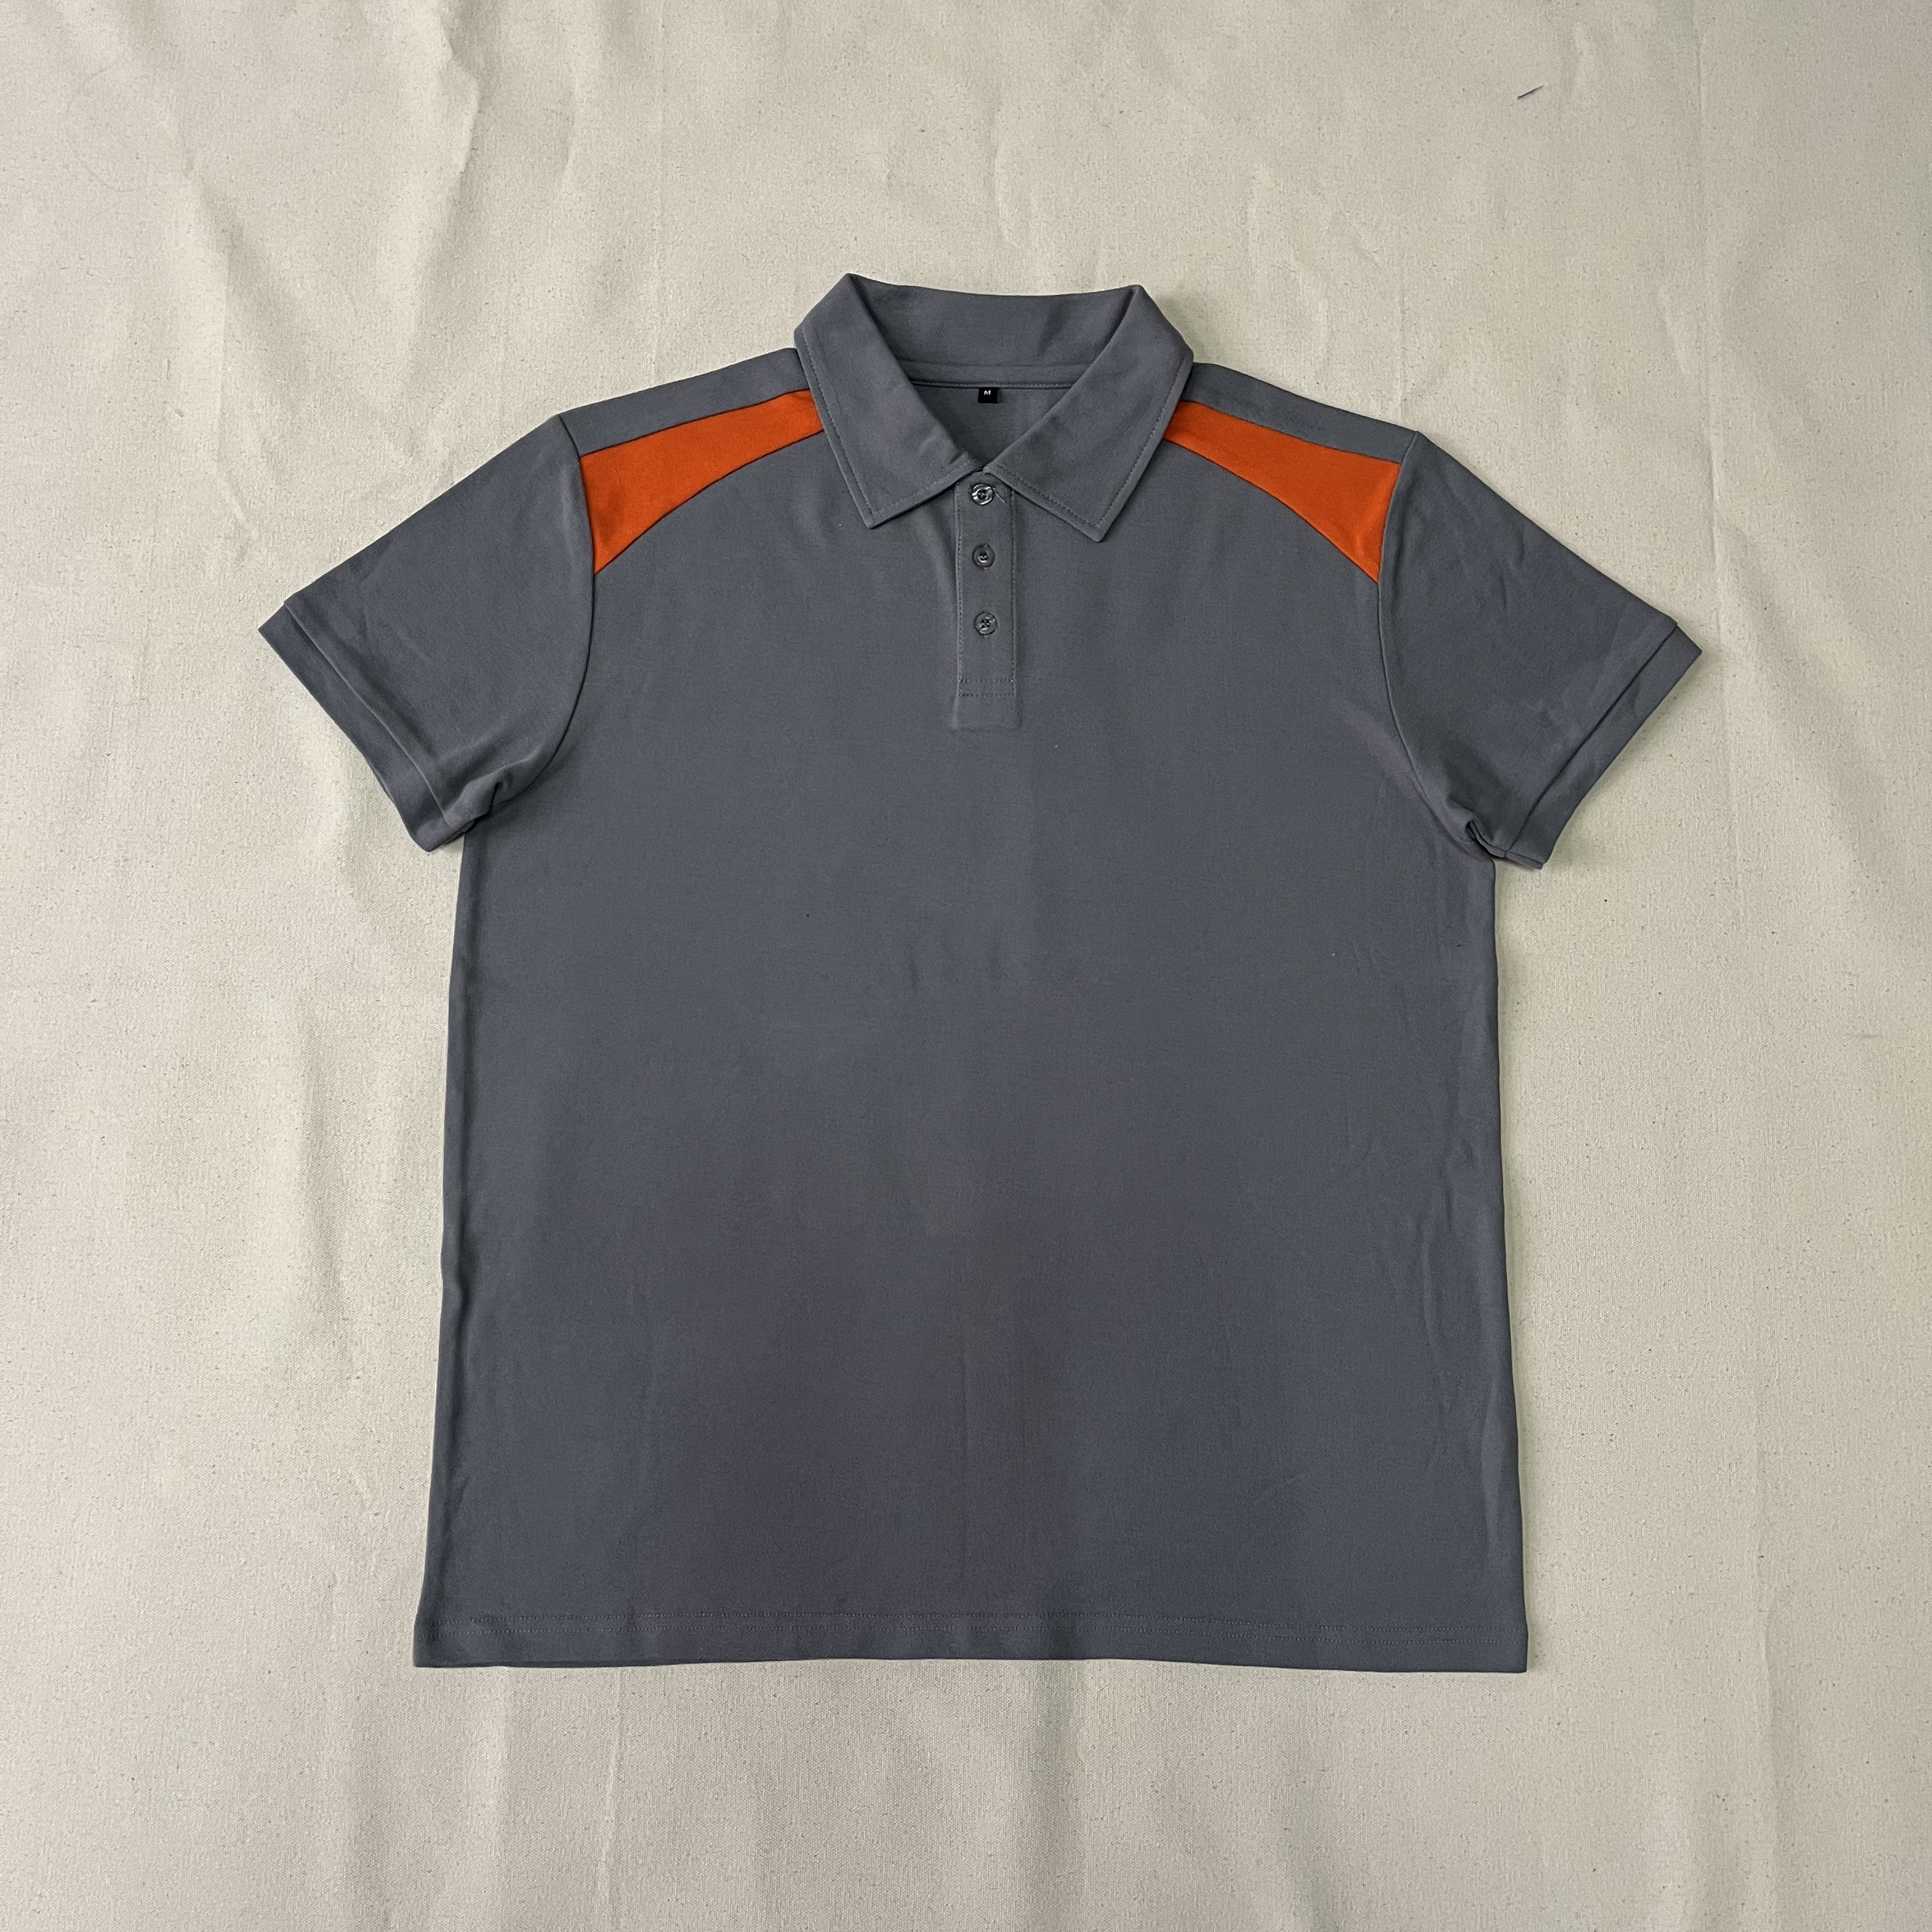 Promotional Advertising Uniform Custom Polo Shirt Featured Image